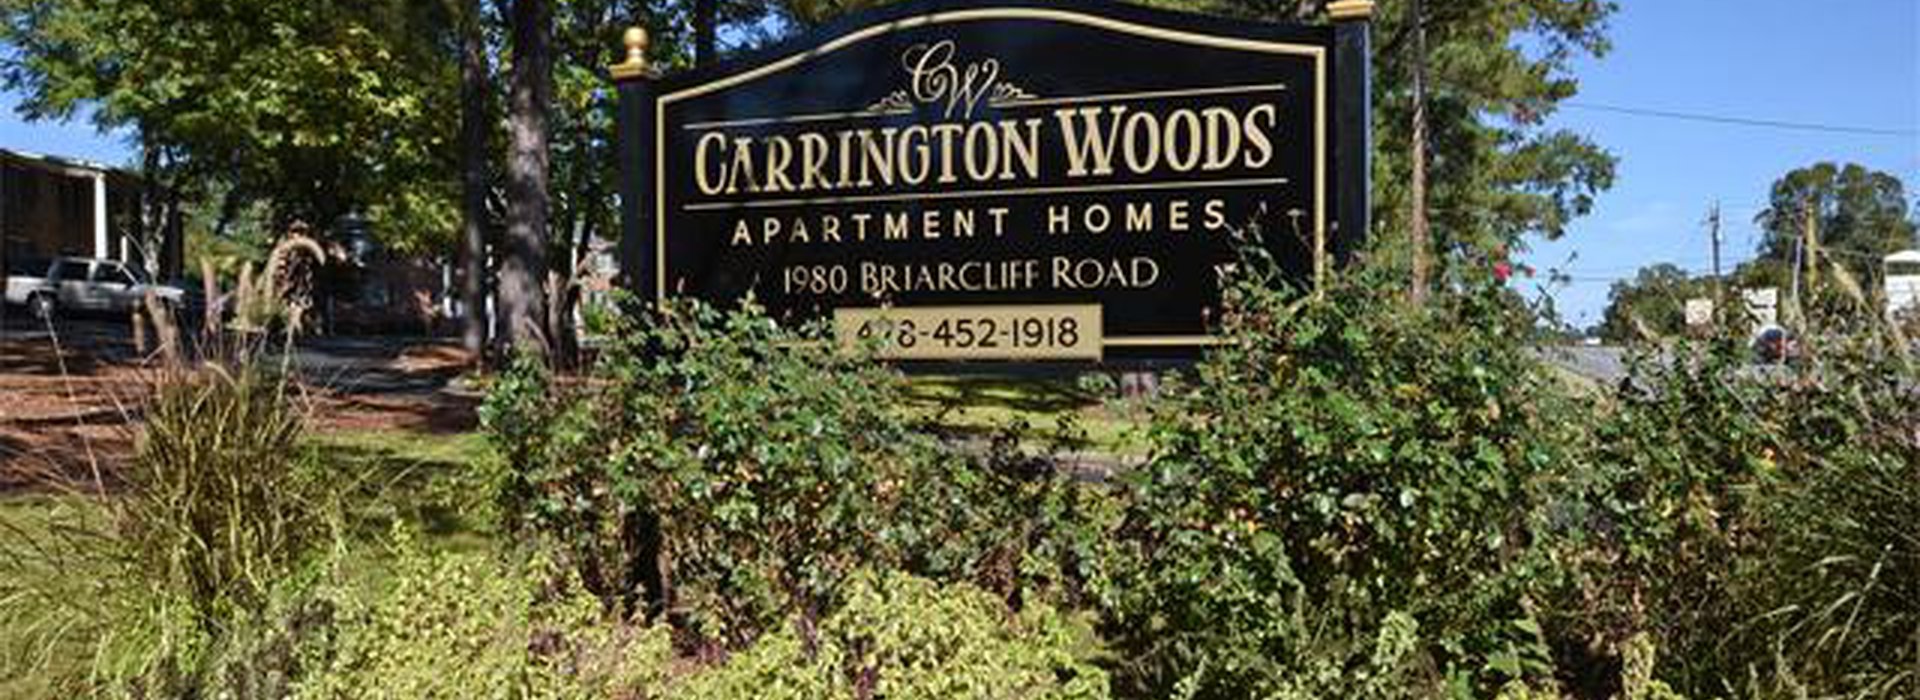 Carrington Woods Apartments sign